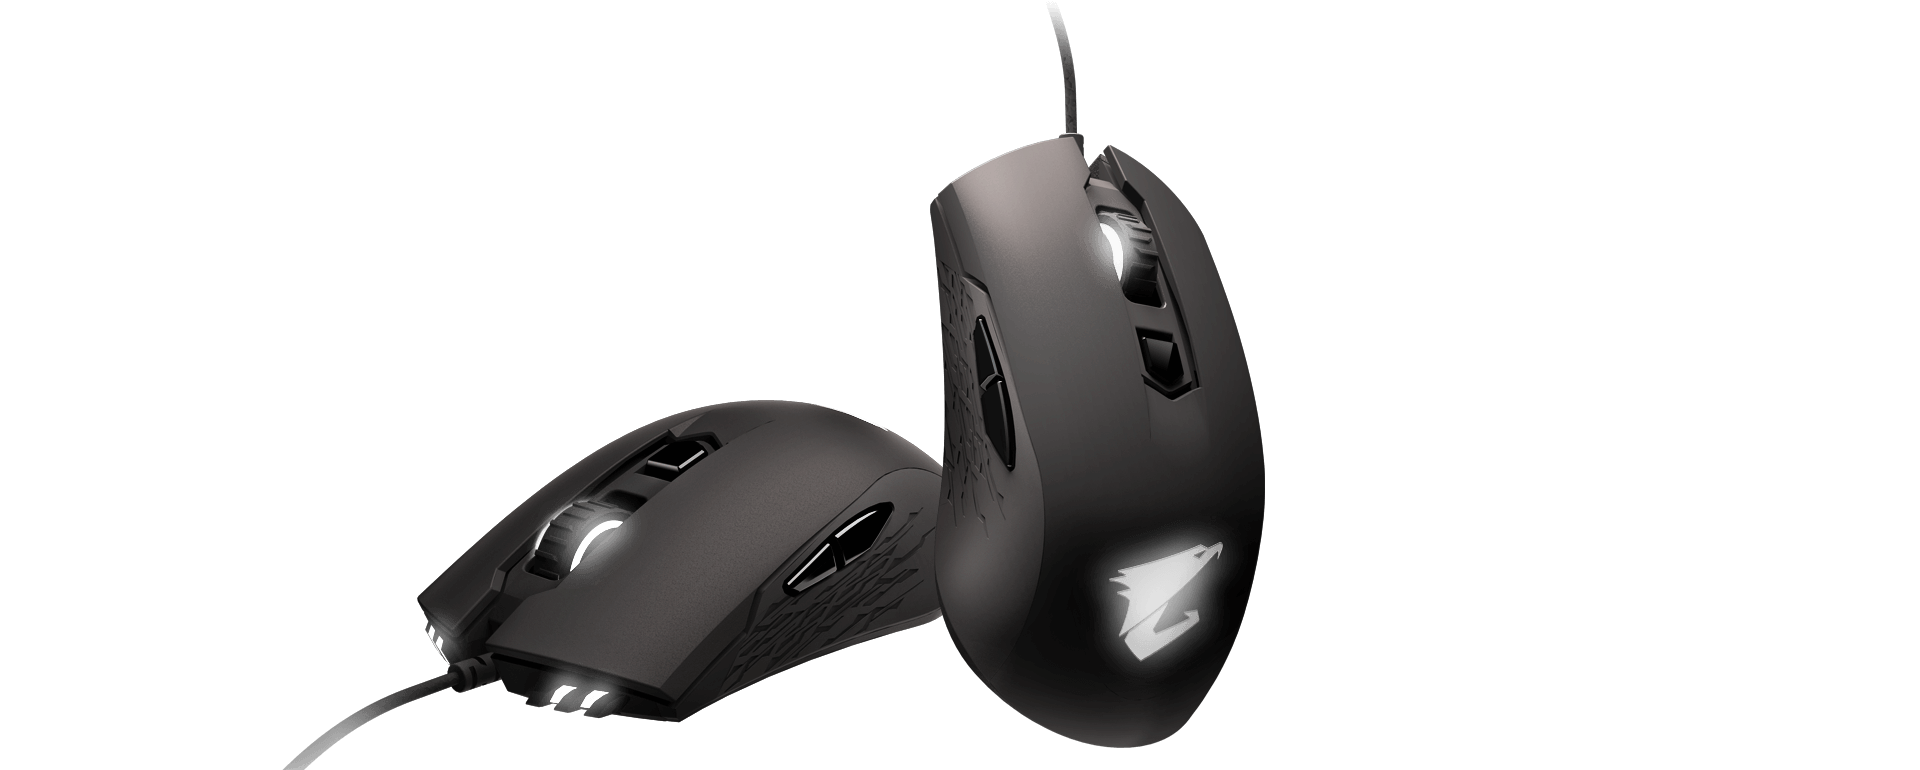 Gigabyte-Aorus-M4-Gaming-Mouse